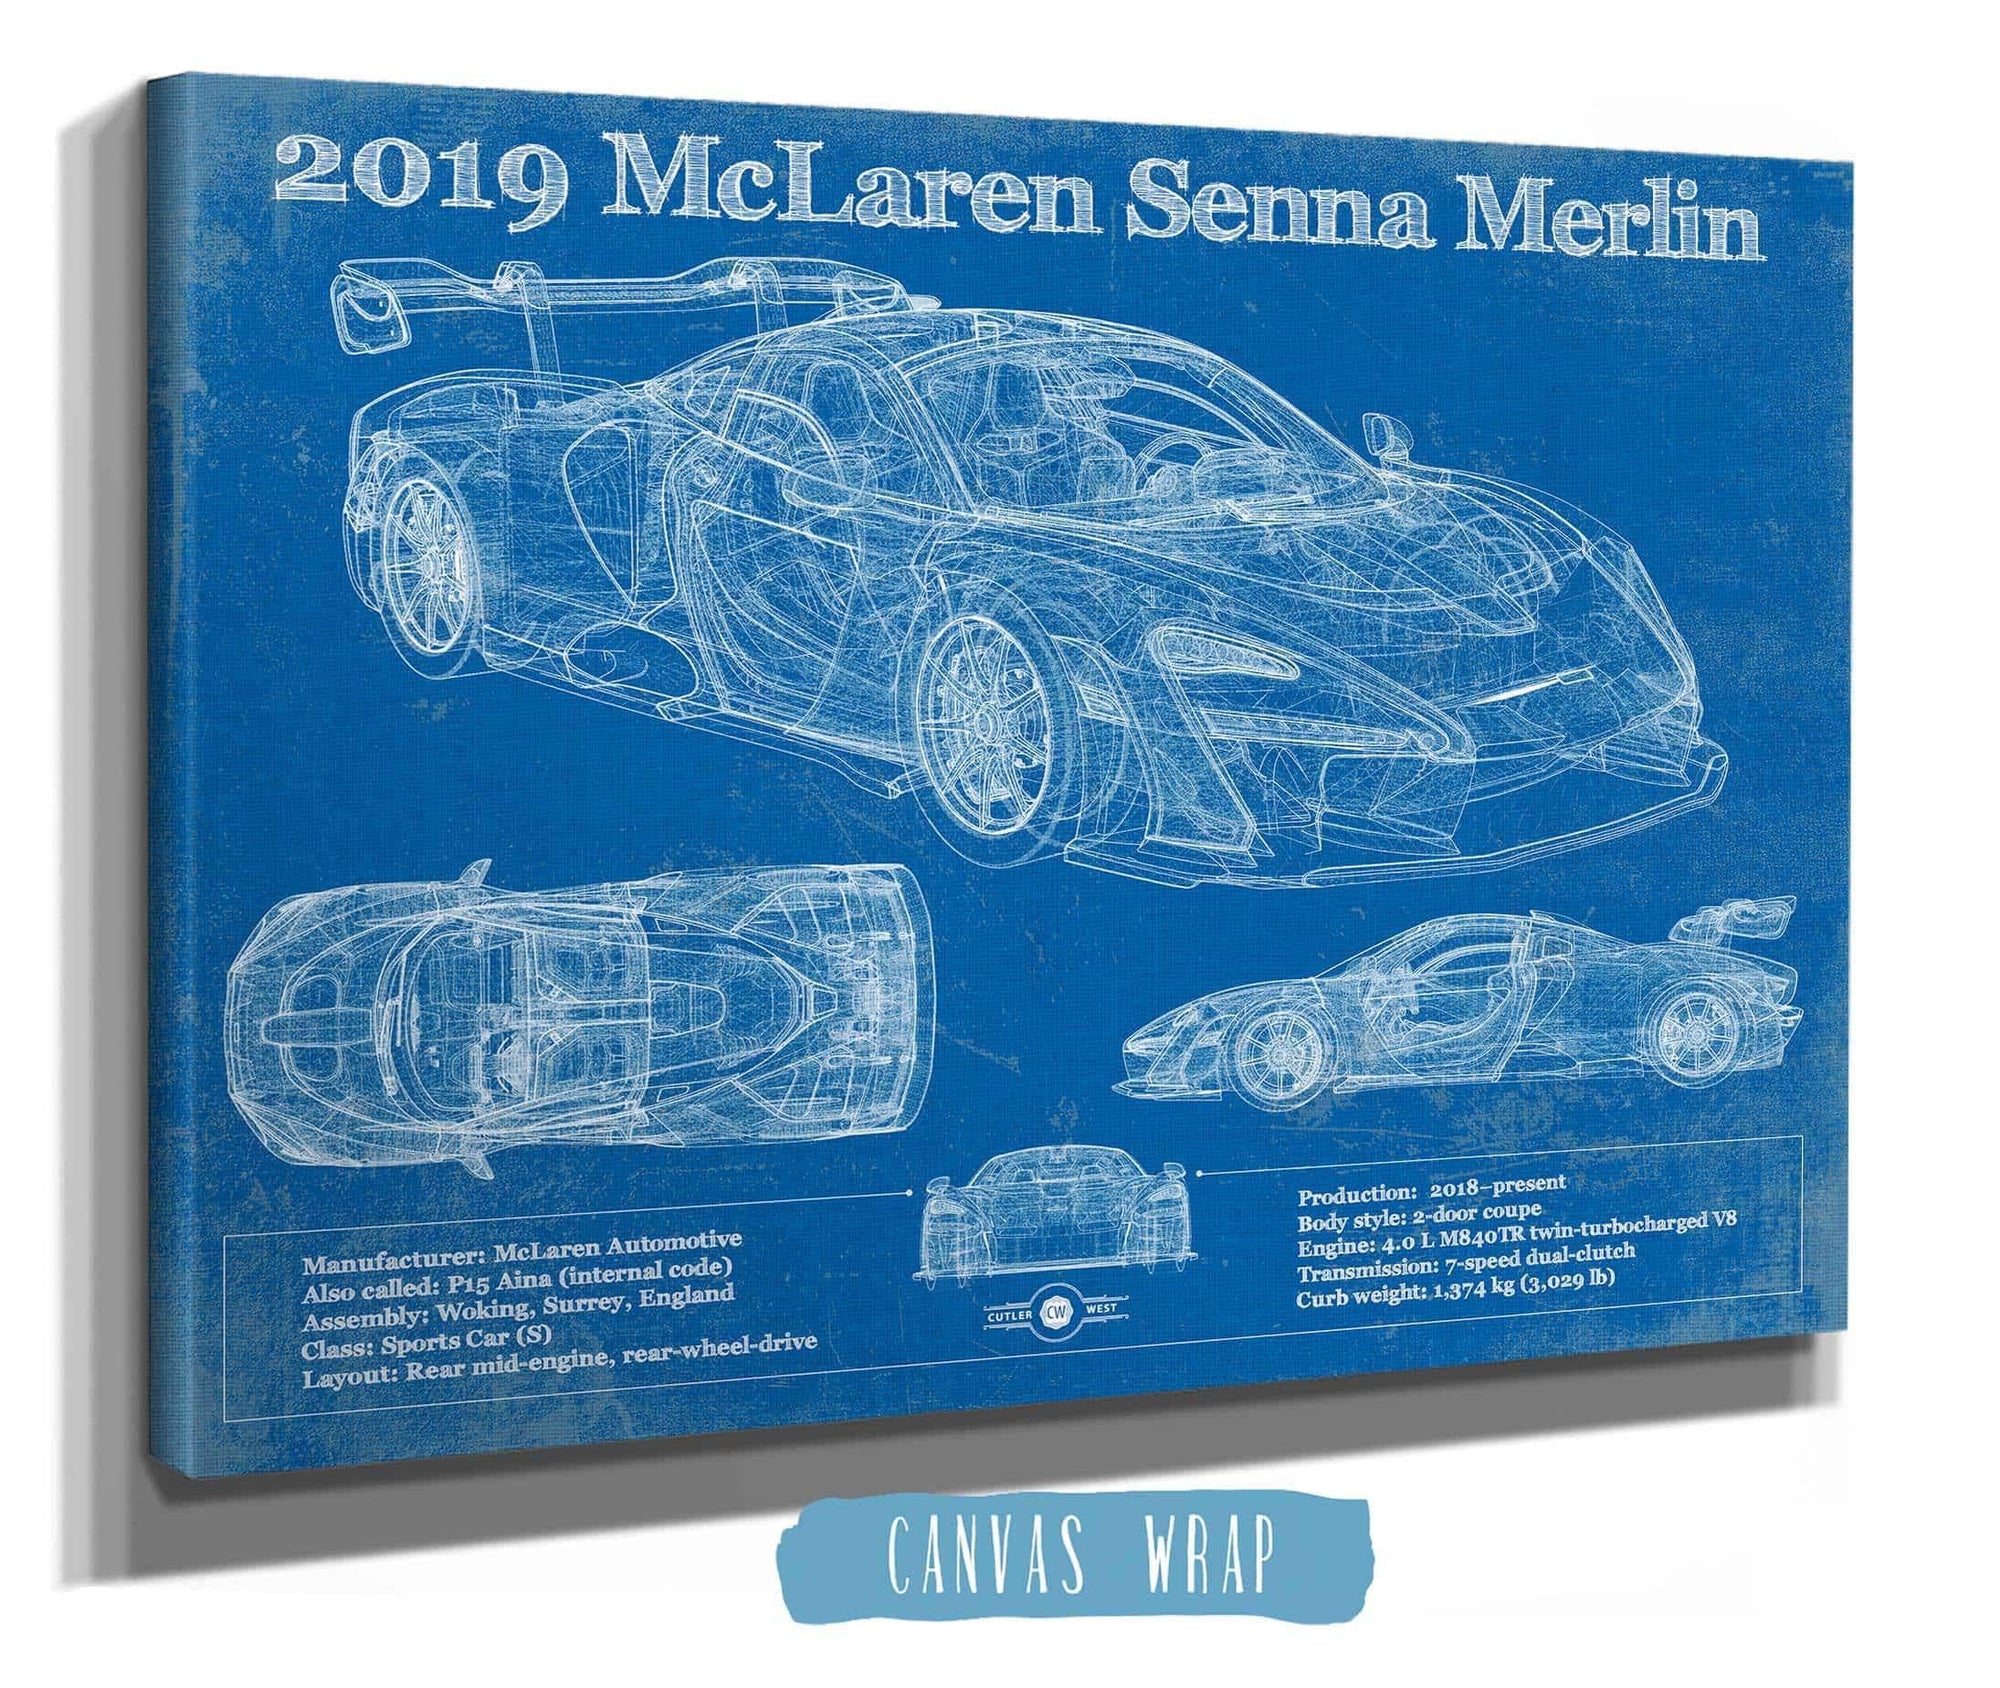 Cutler West Vehicle Collection 2019 Mclaren Senna Merlin Vintage Blueprint Auto Print